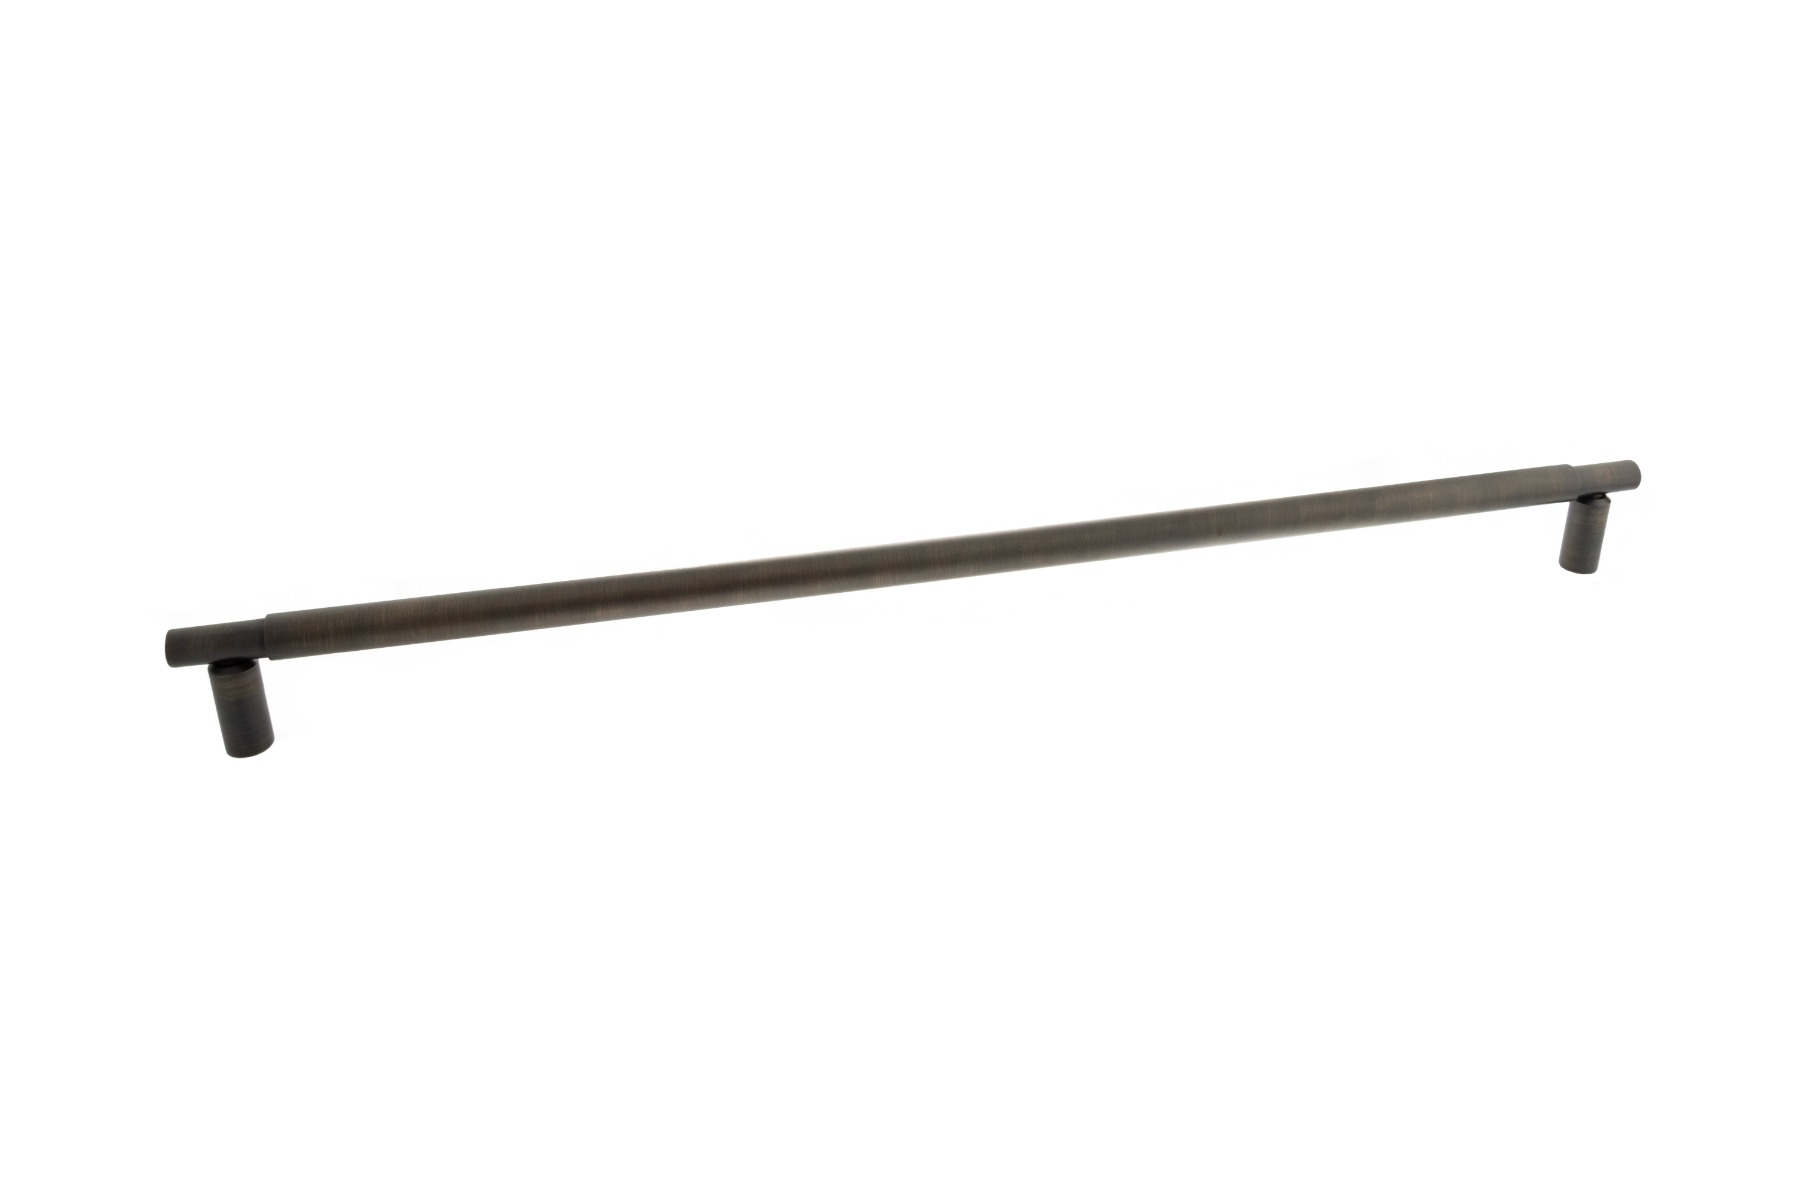 Millhouse Brass T Bar Pull Handle [Bolt Through] 725mm x 22mm - Urban Bronze MHPH725UB